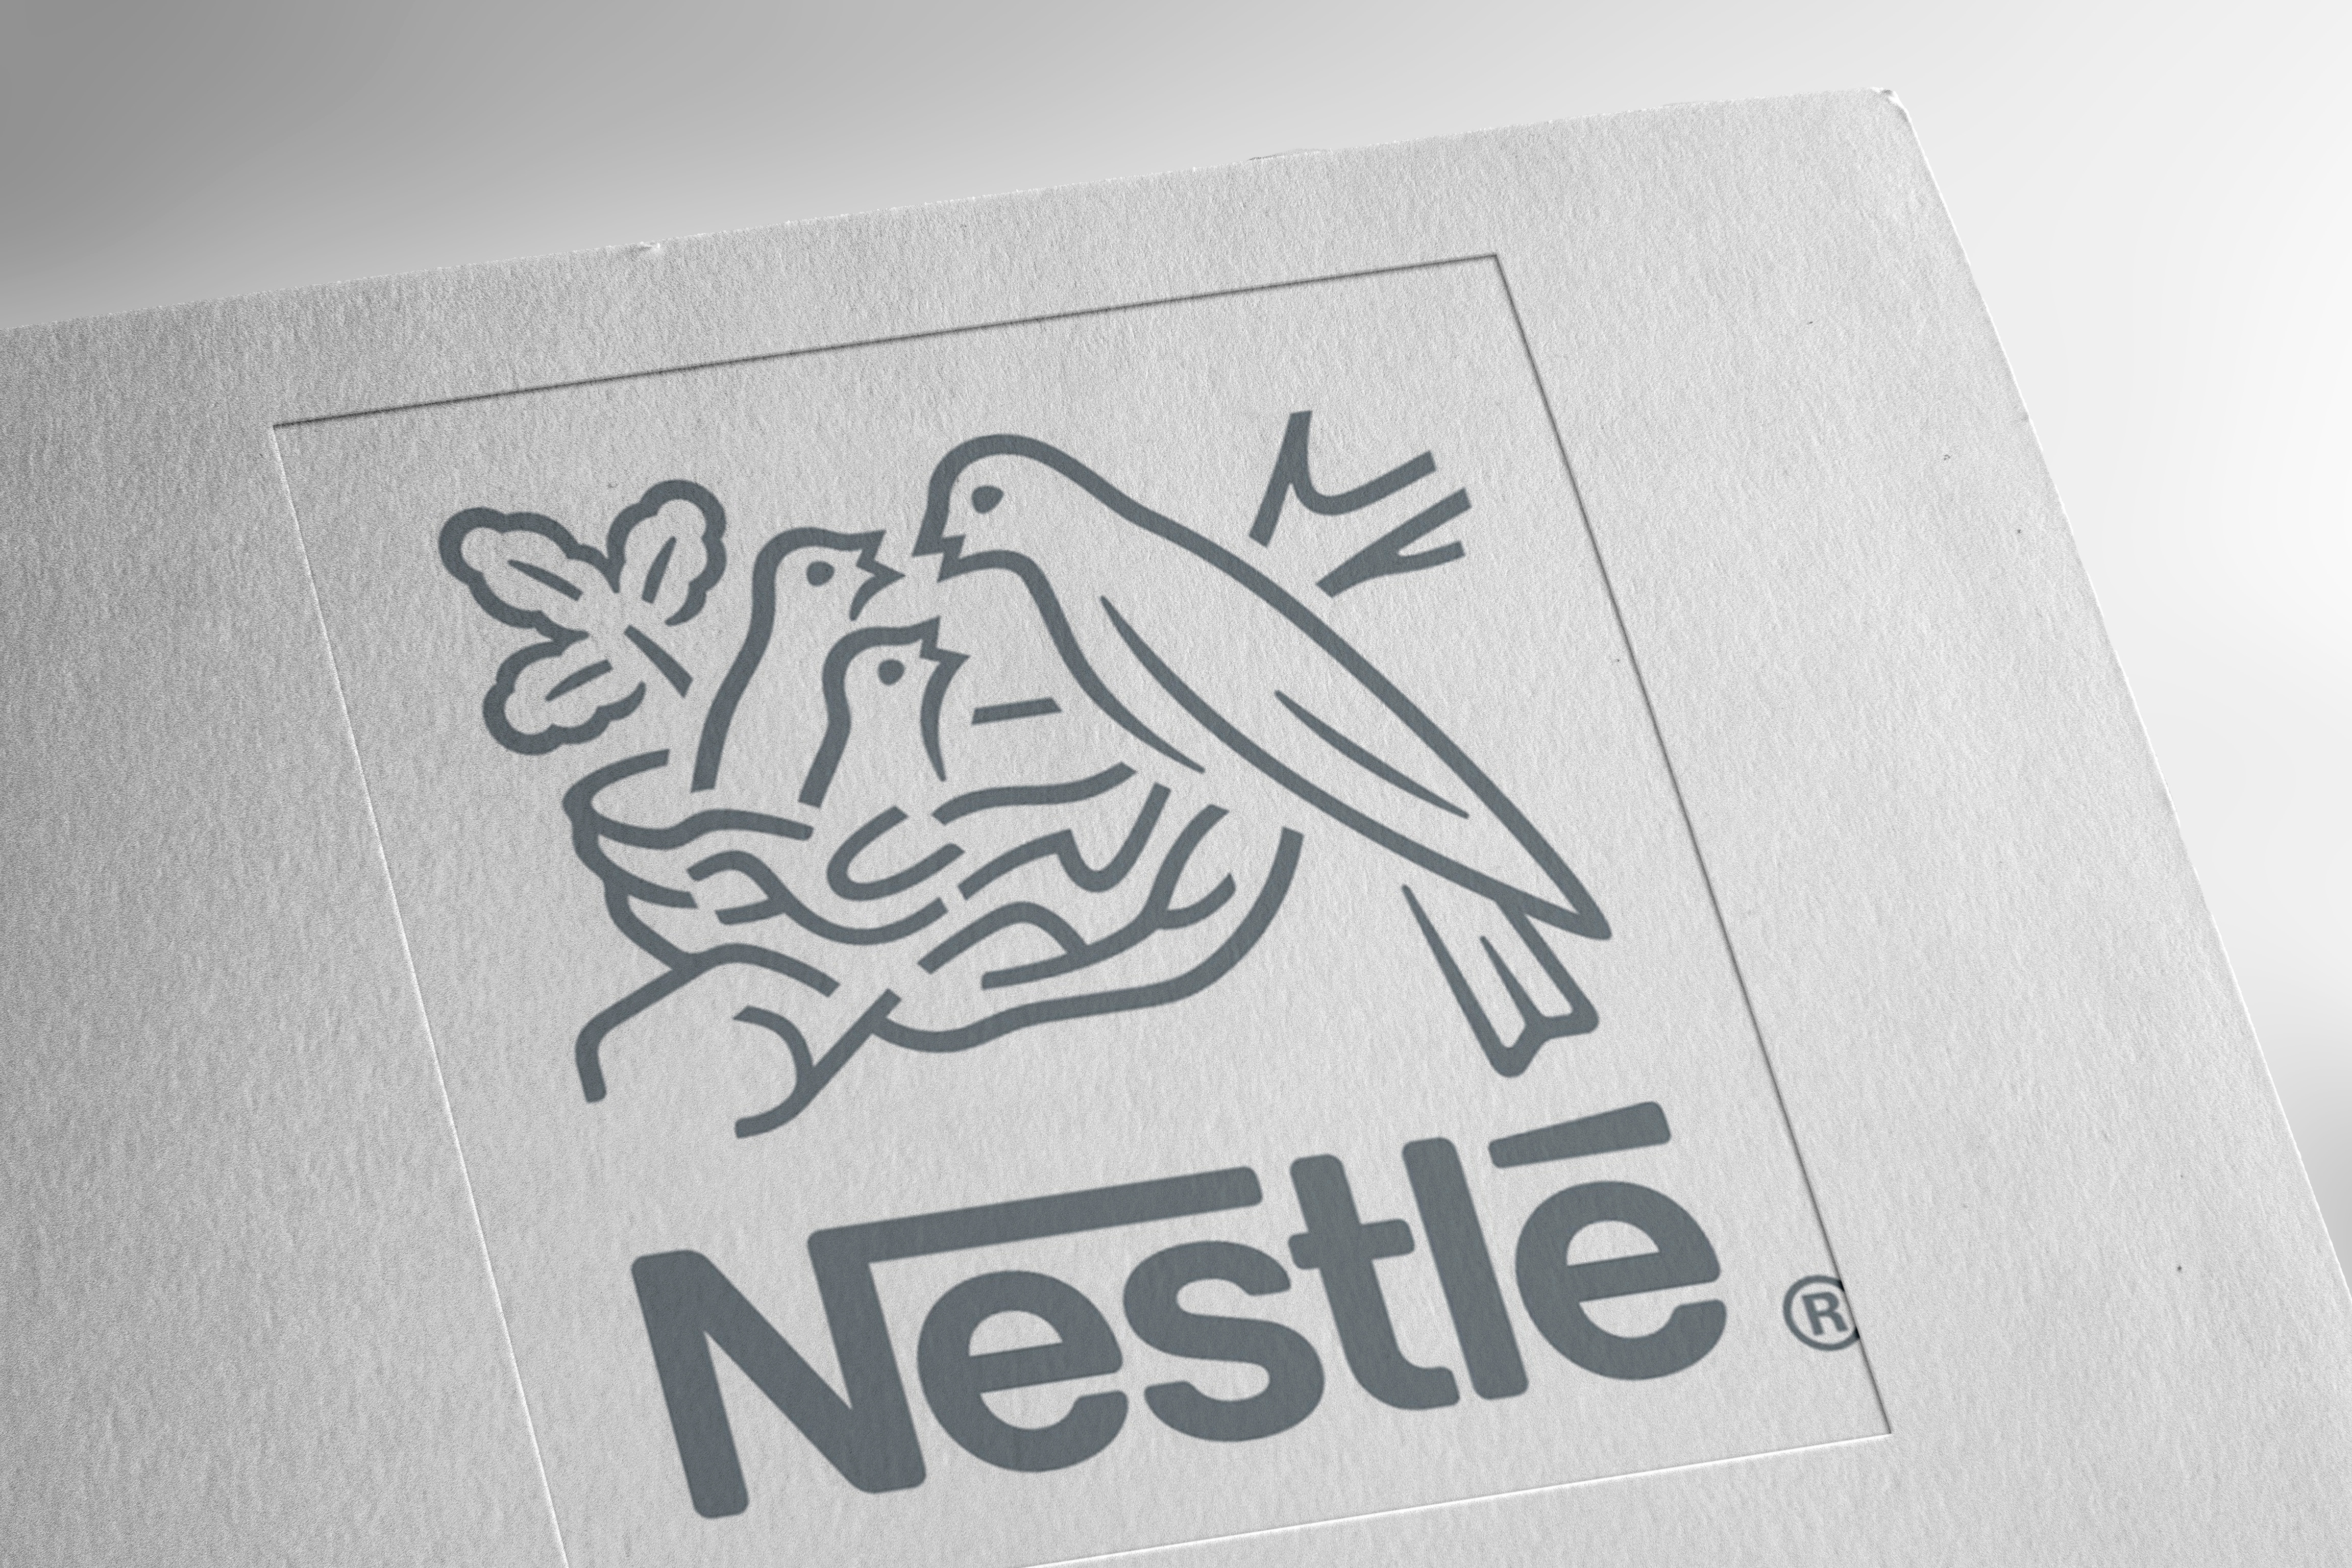 Nestlé neemt datakwaliteit in eigen beheer met GS1 Data SelfCheck - Nestle neemt datakwaliteit in eigen beheer met GS1 Data SelfCheck